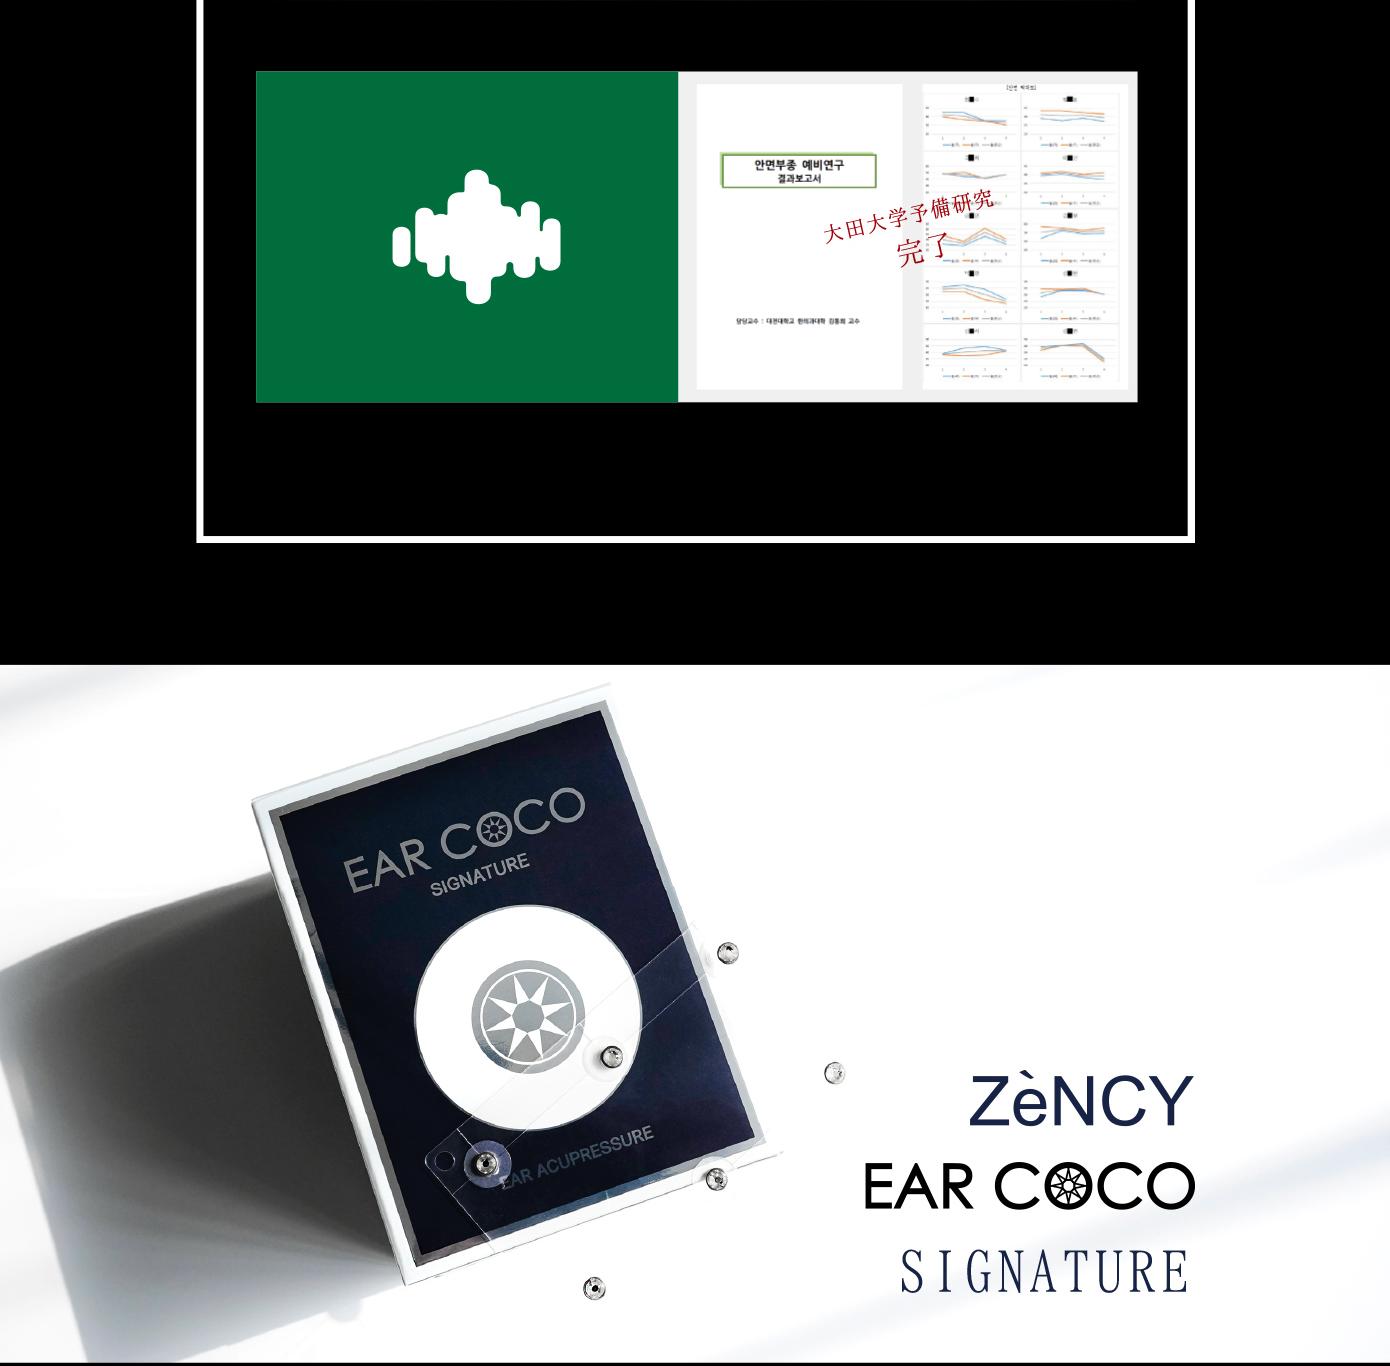 EAR COCO | CHARIS & Co.